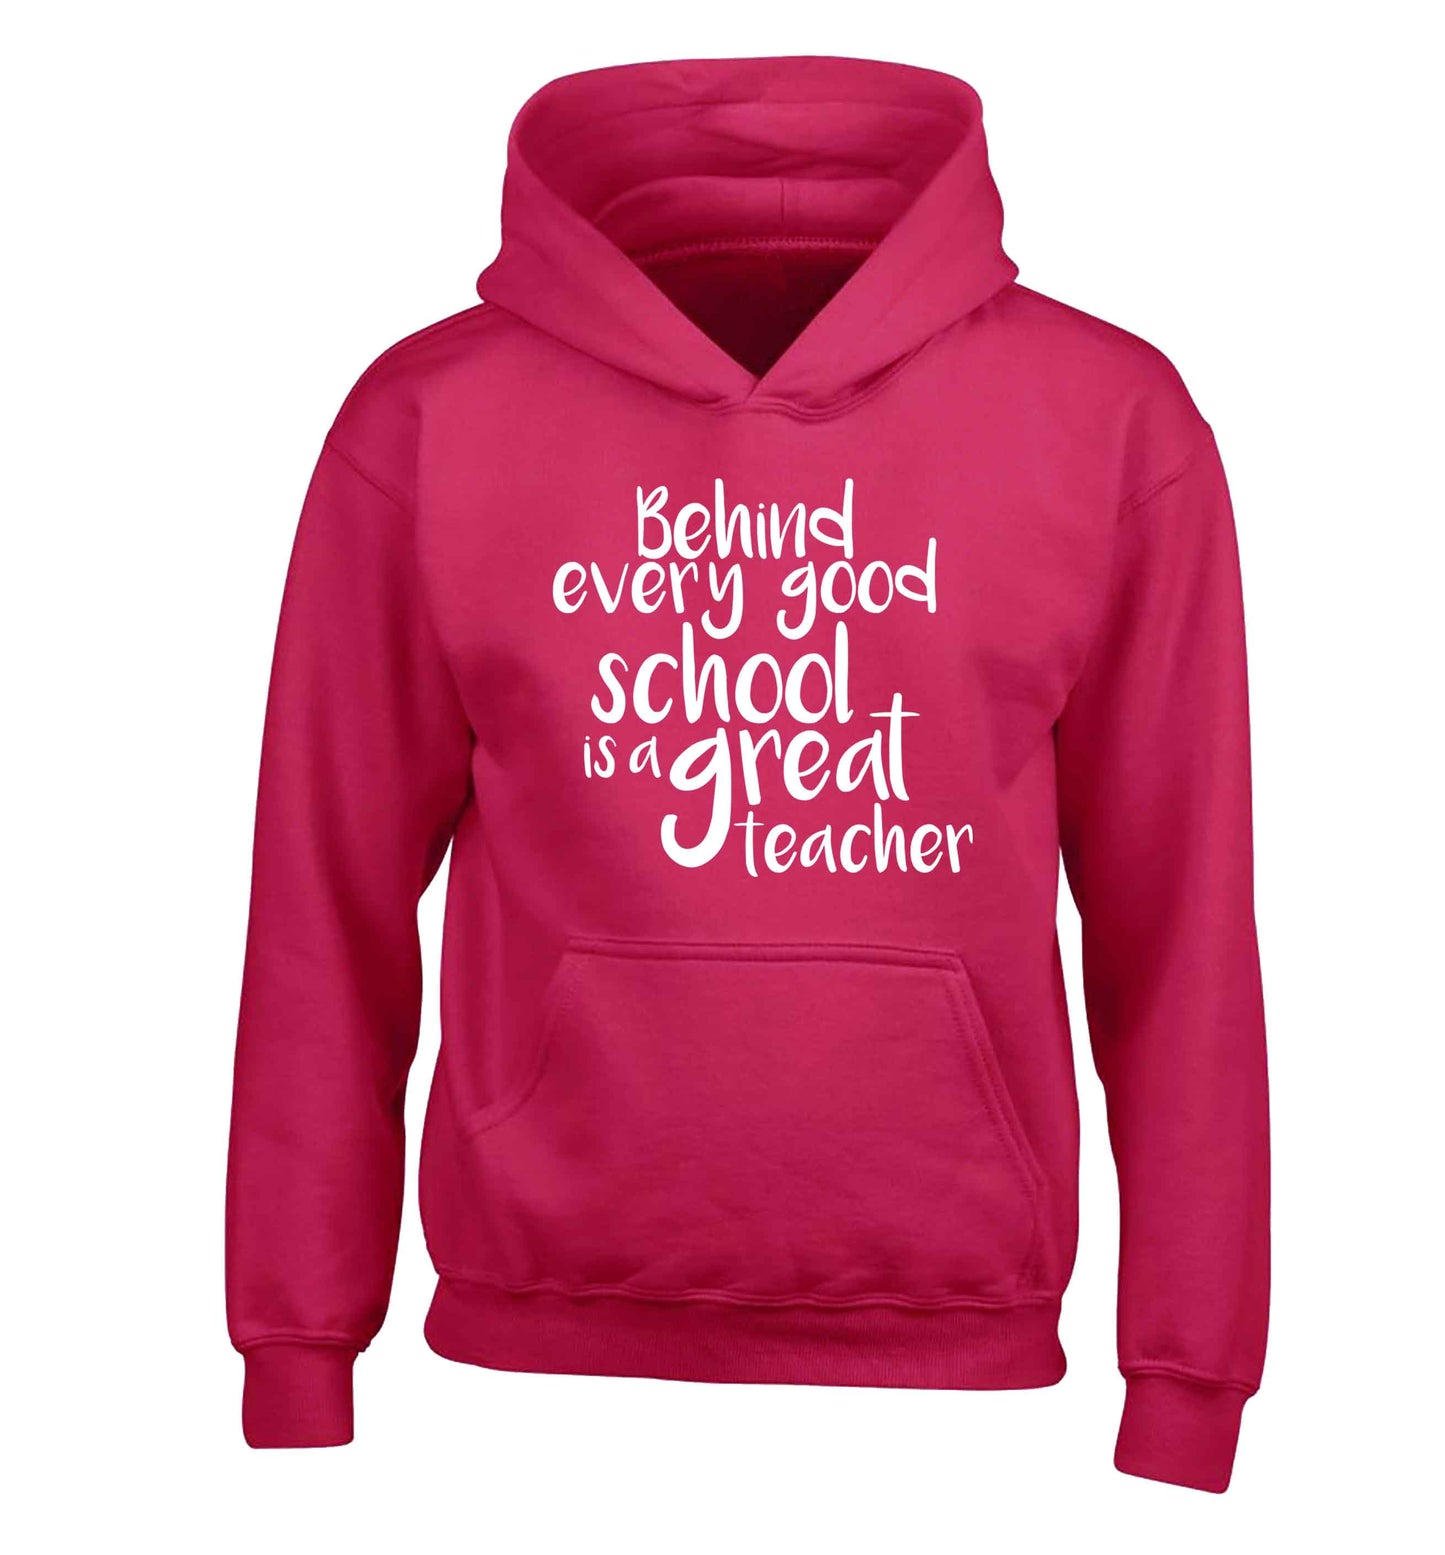 Behind every good school is a great teacher children's pink hoodie 12-13 Years